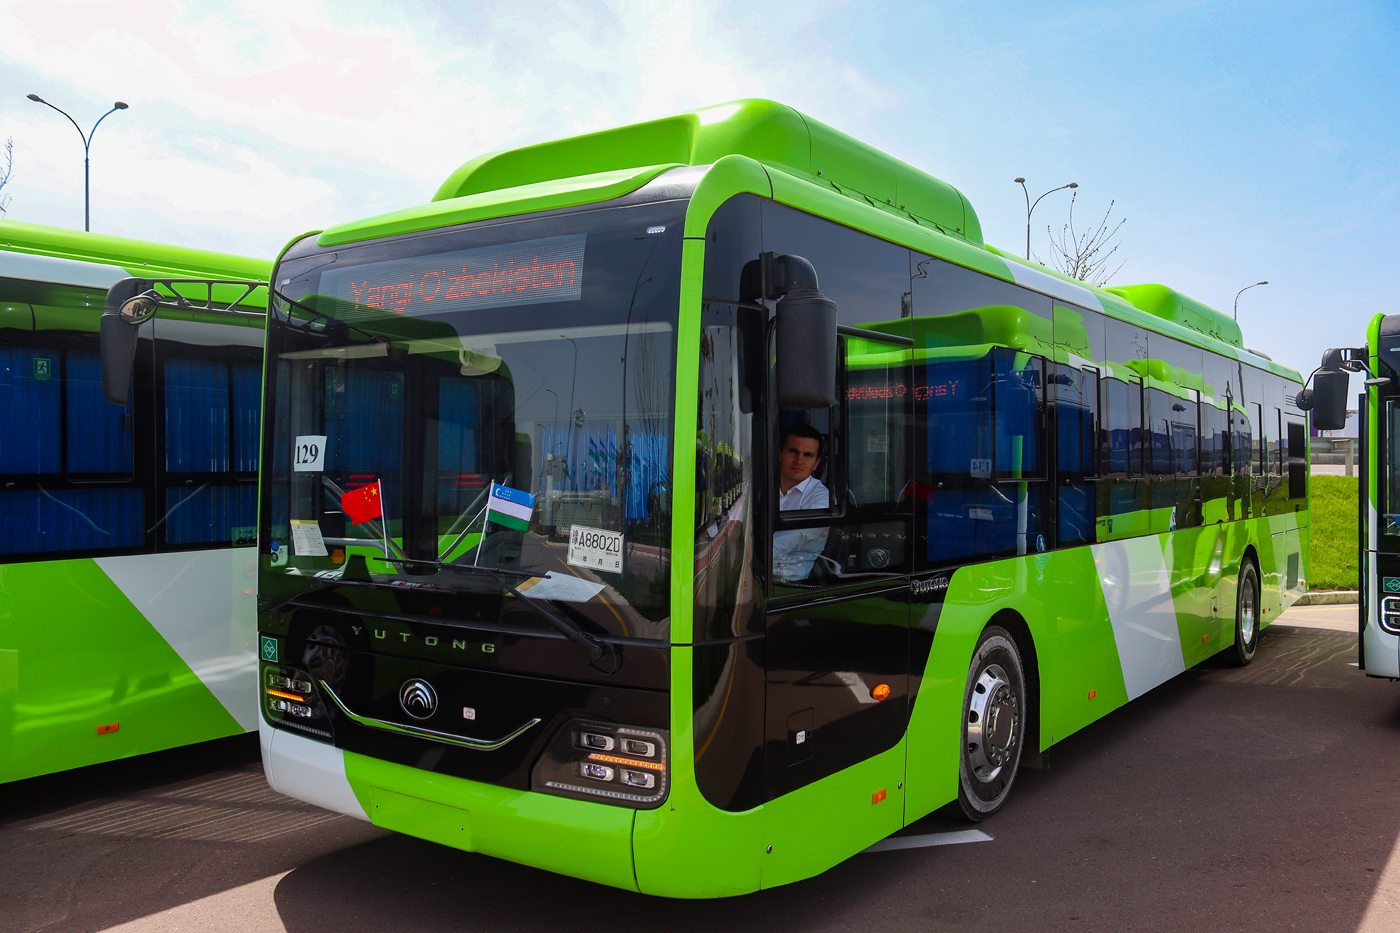 Taschkent — Presentatiom of new buses